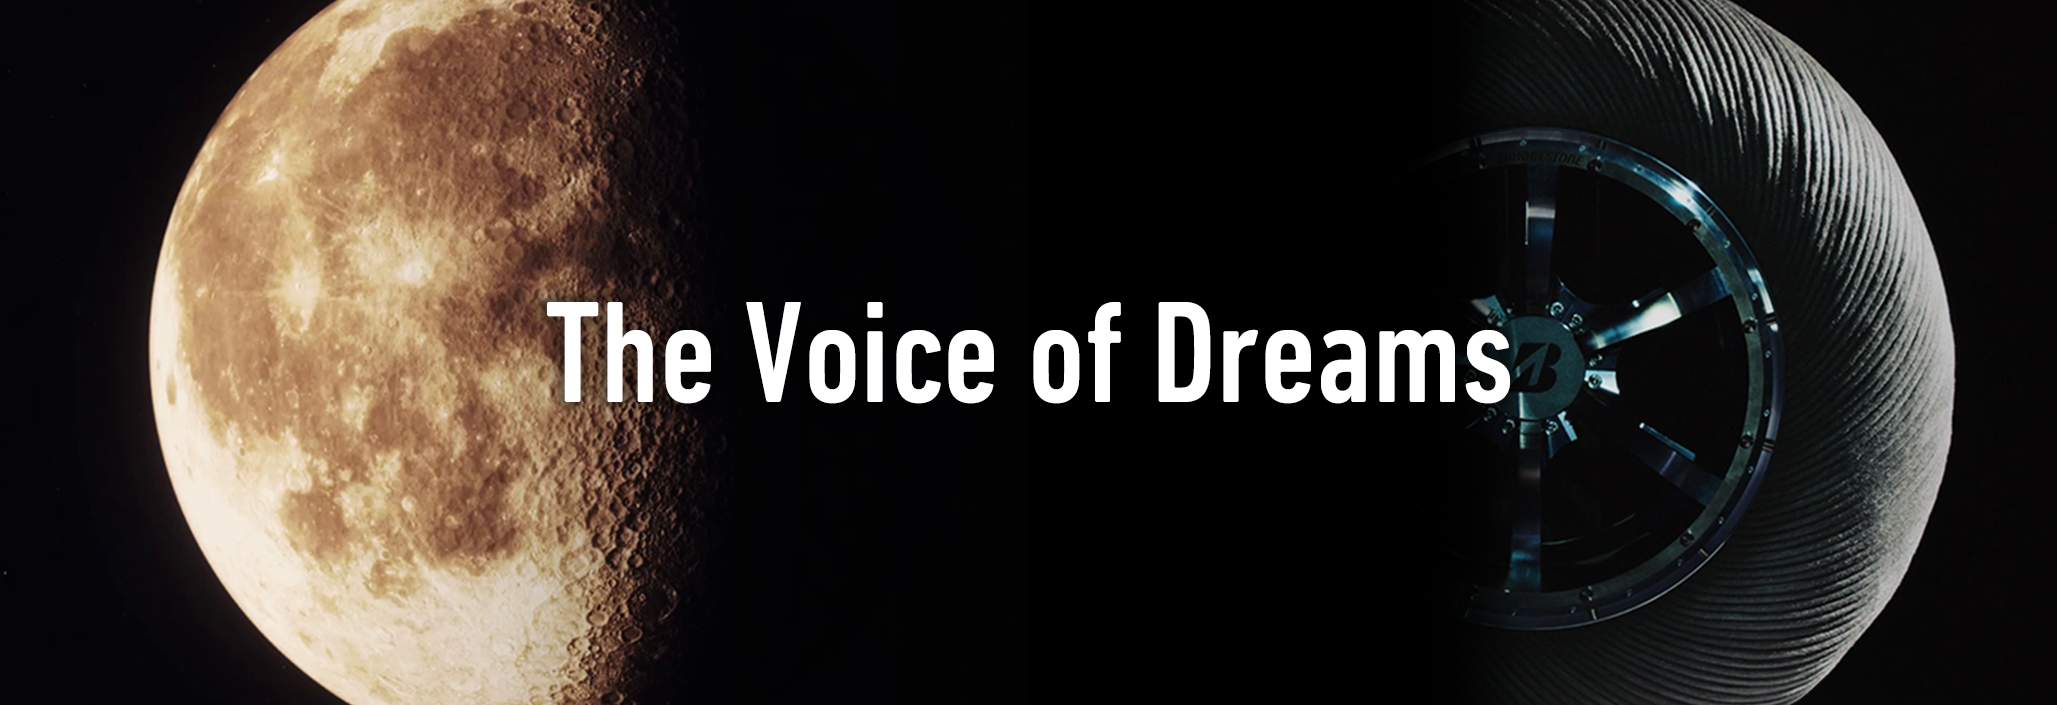 The Voice of Dreams